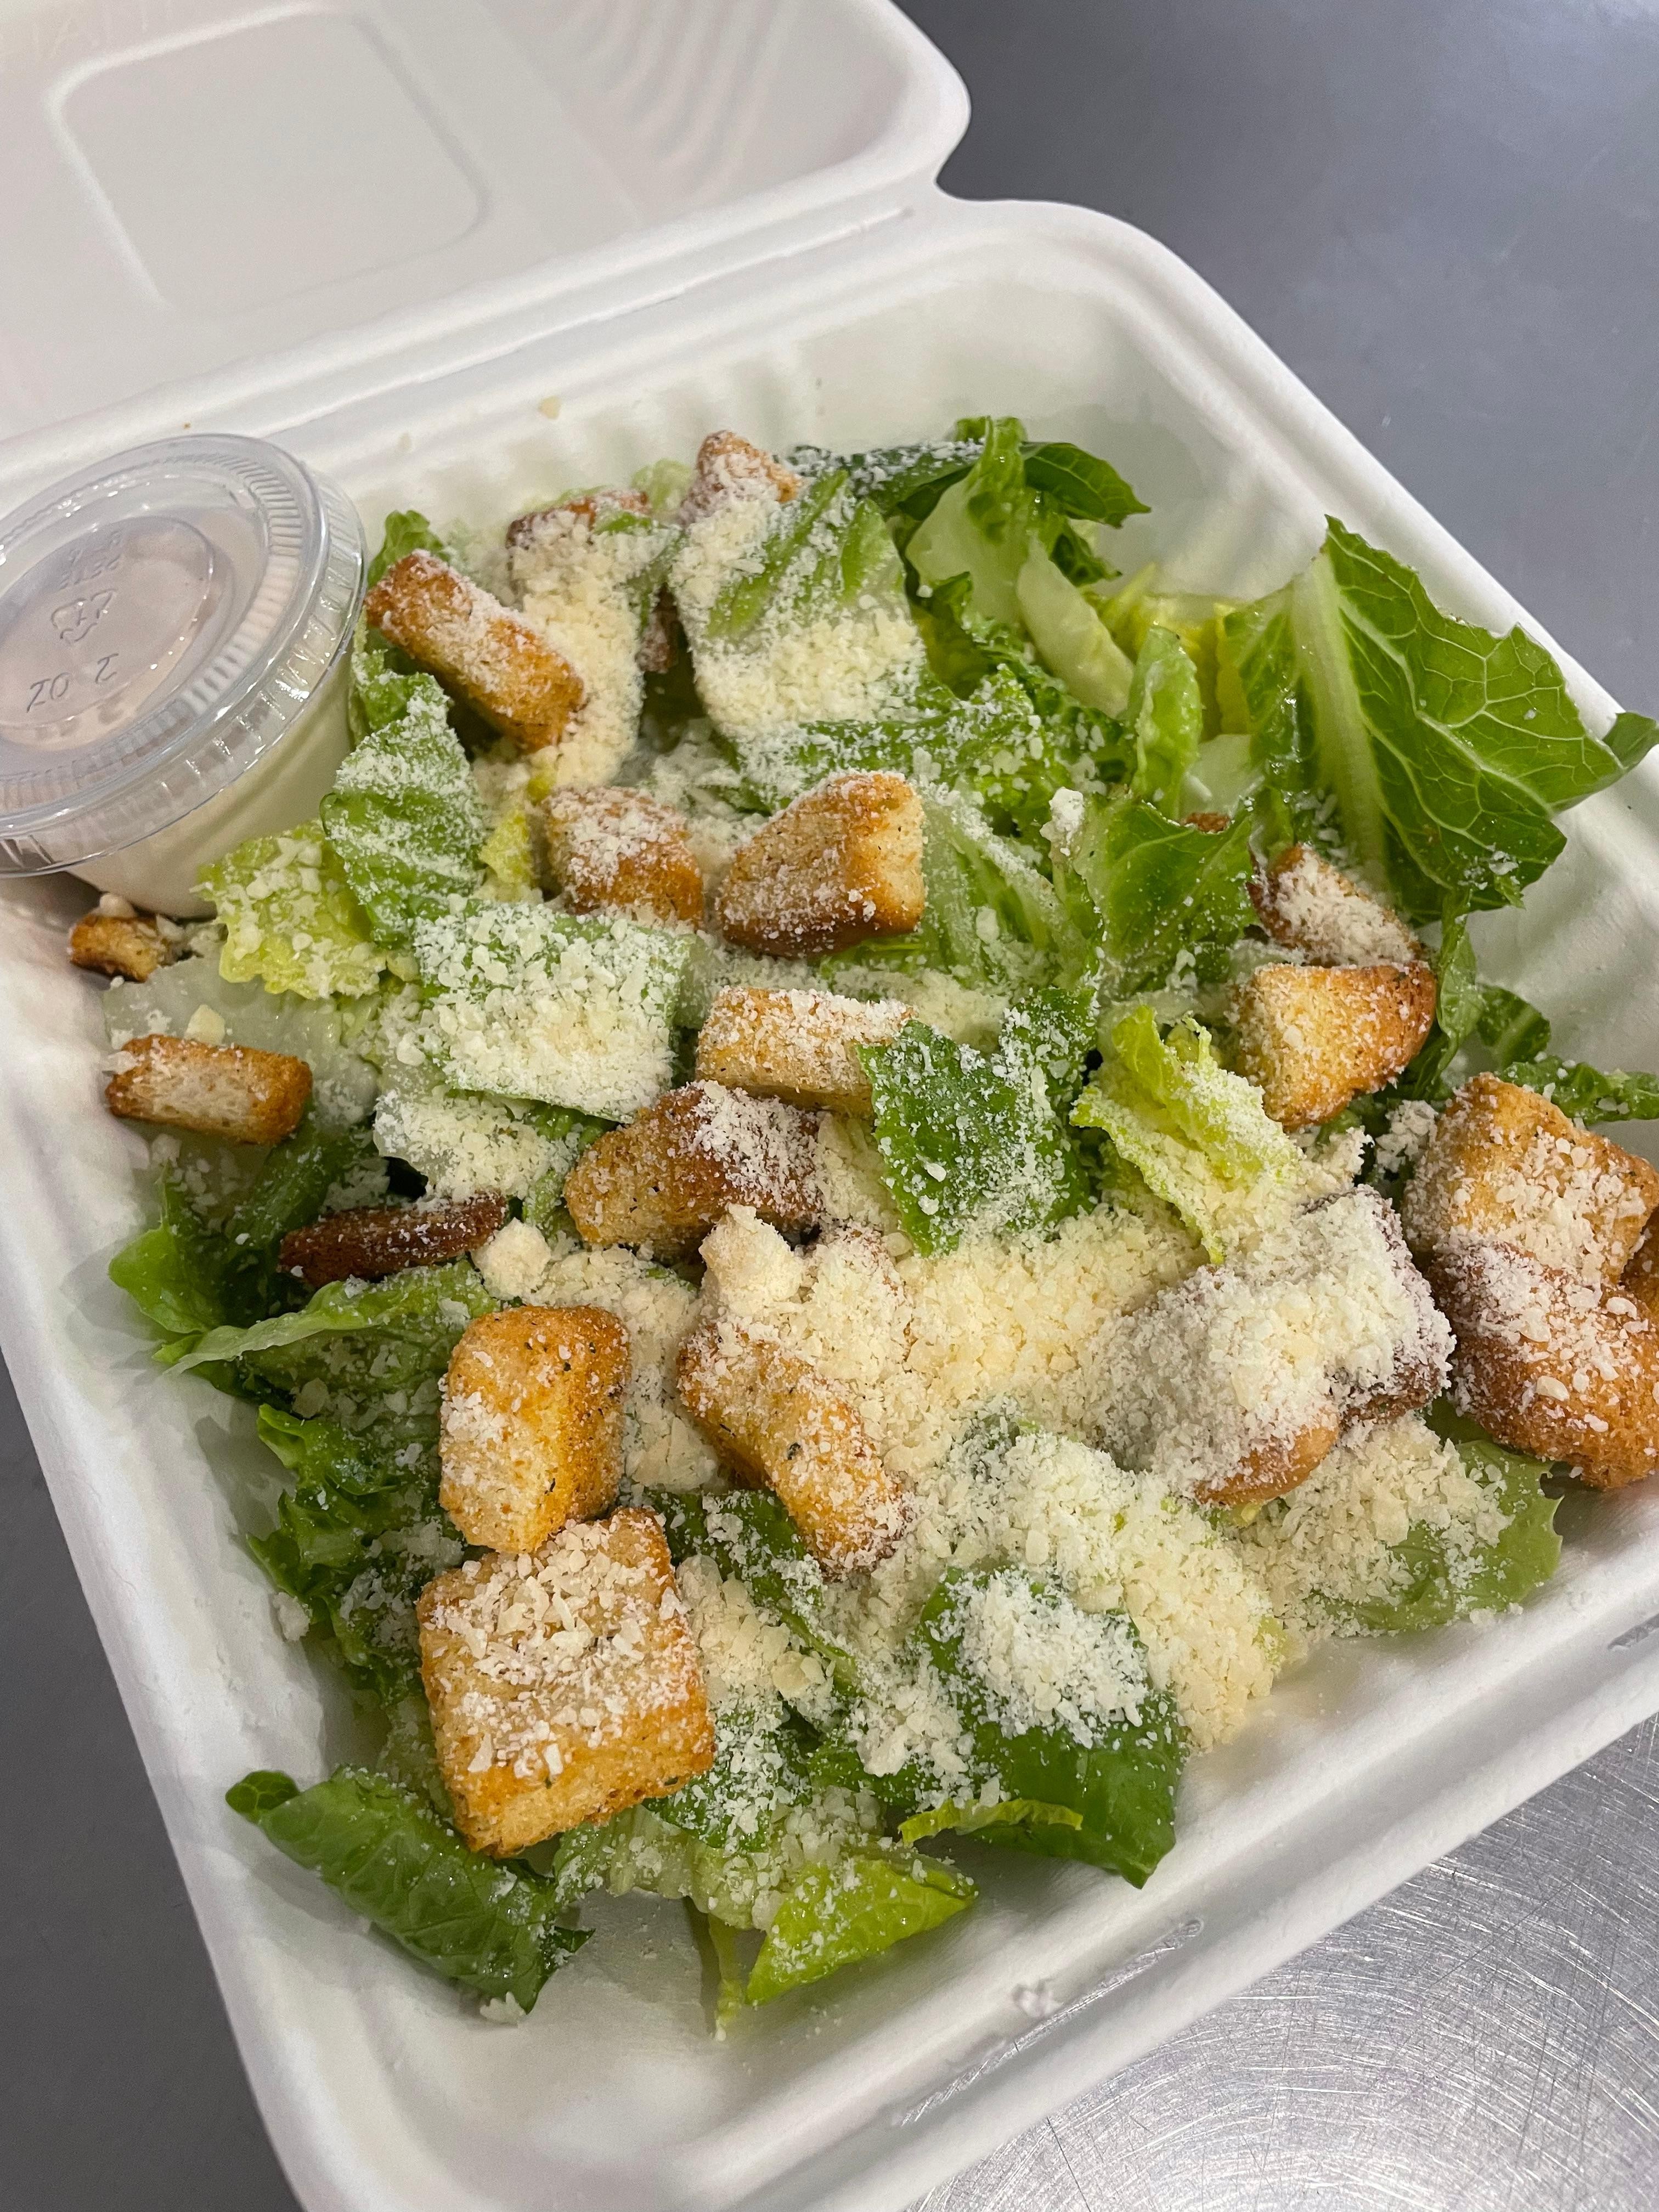 The Caesar Salad